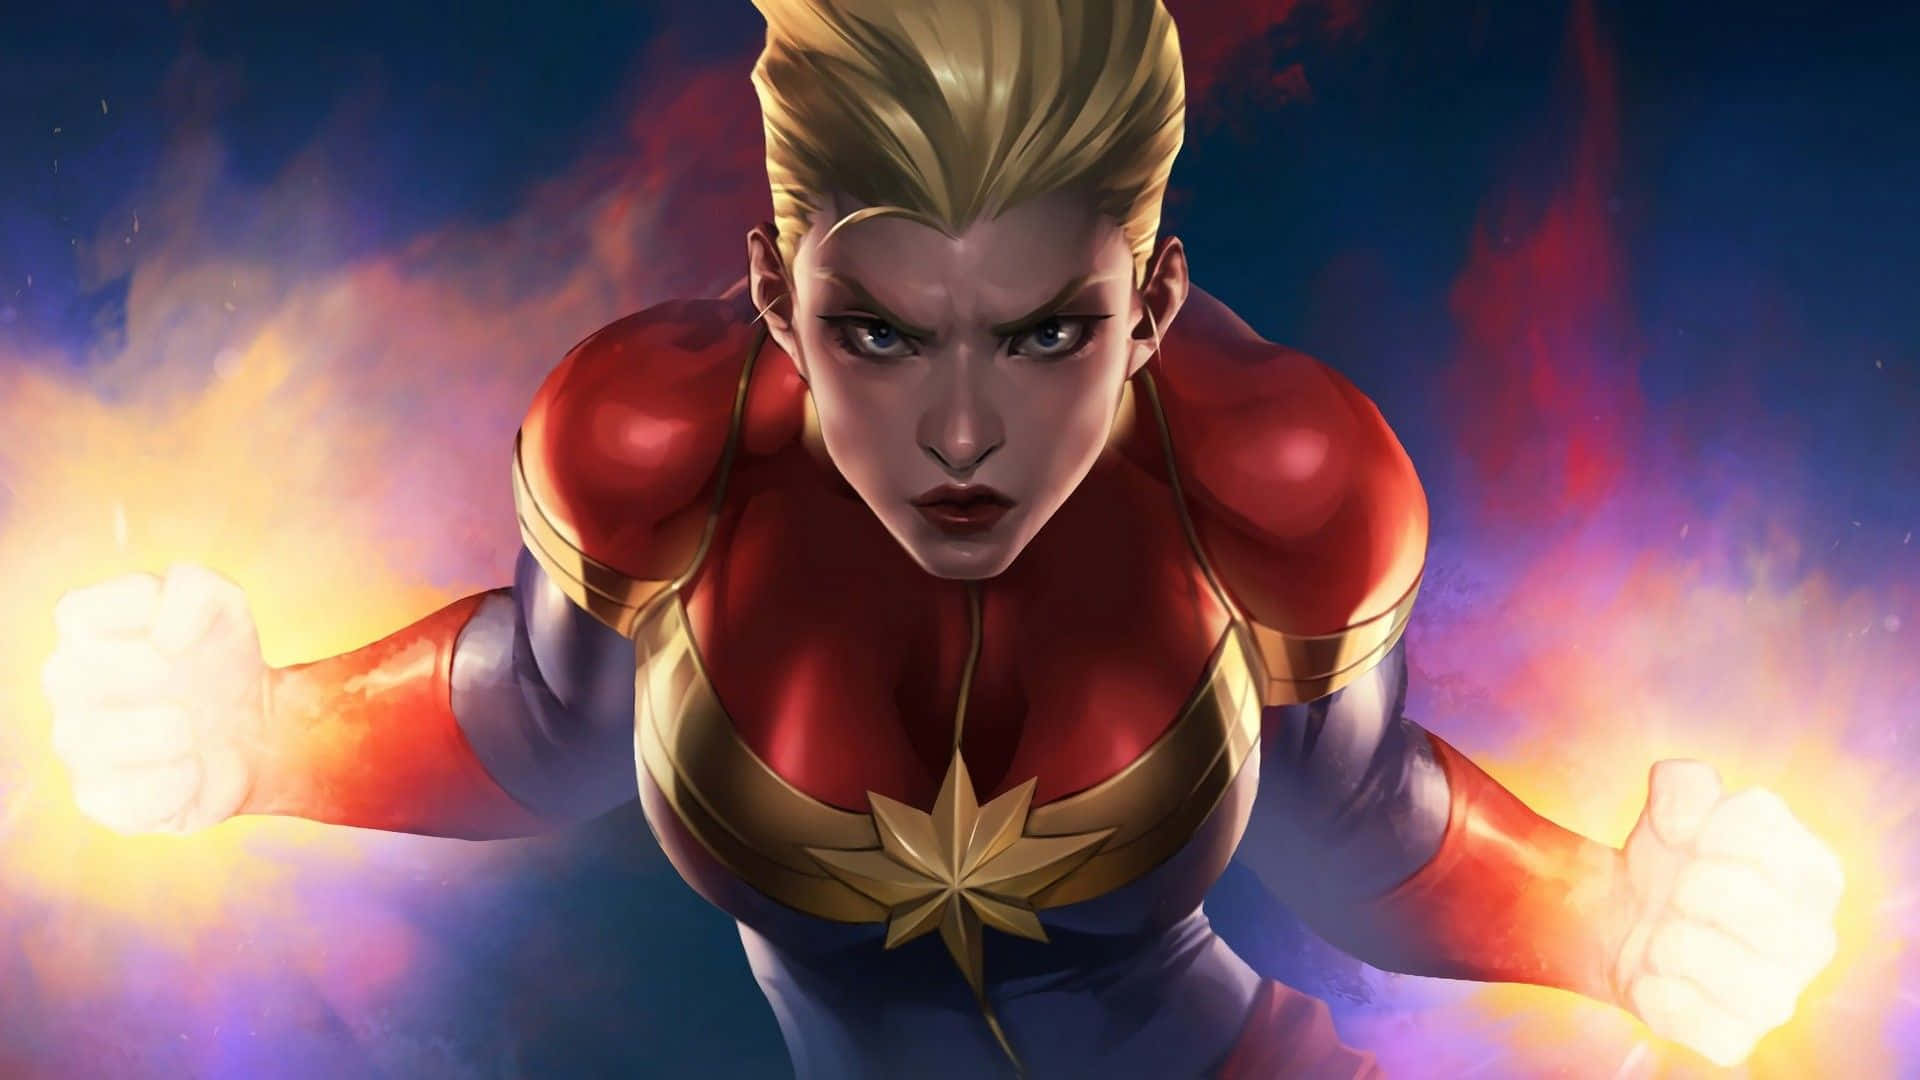 Superheroes In 3D: Brie Larson as Captain Marvel Wallpaper